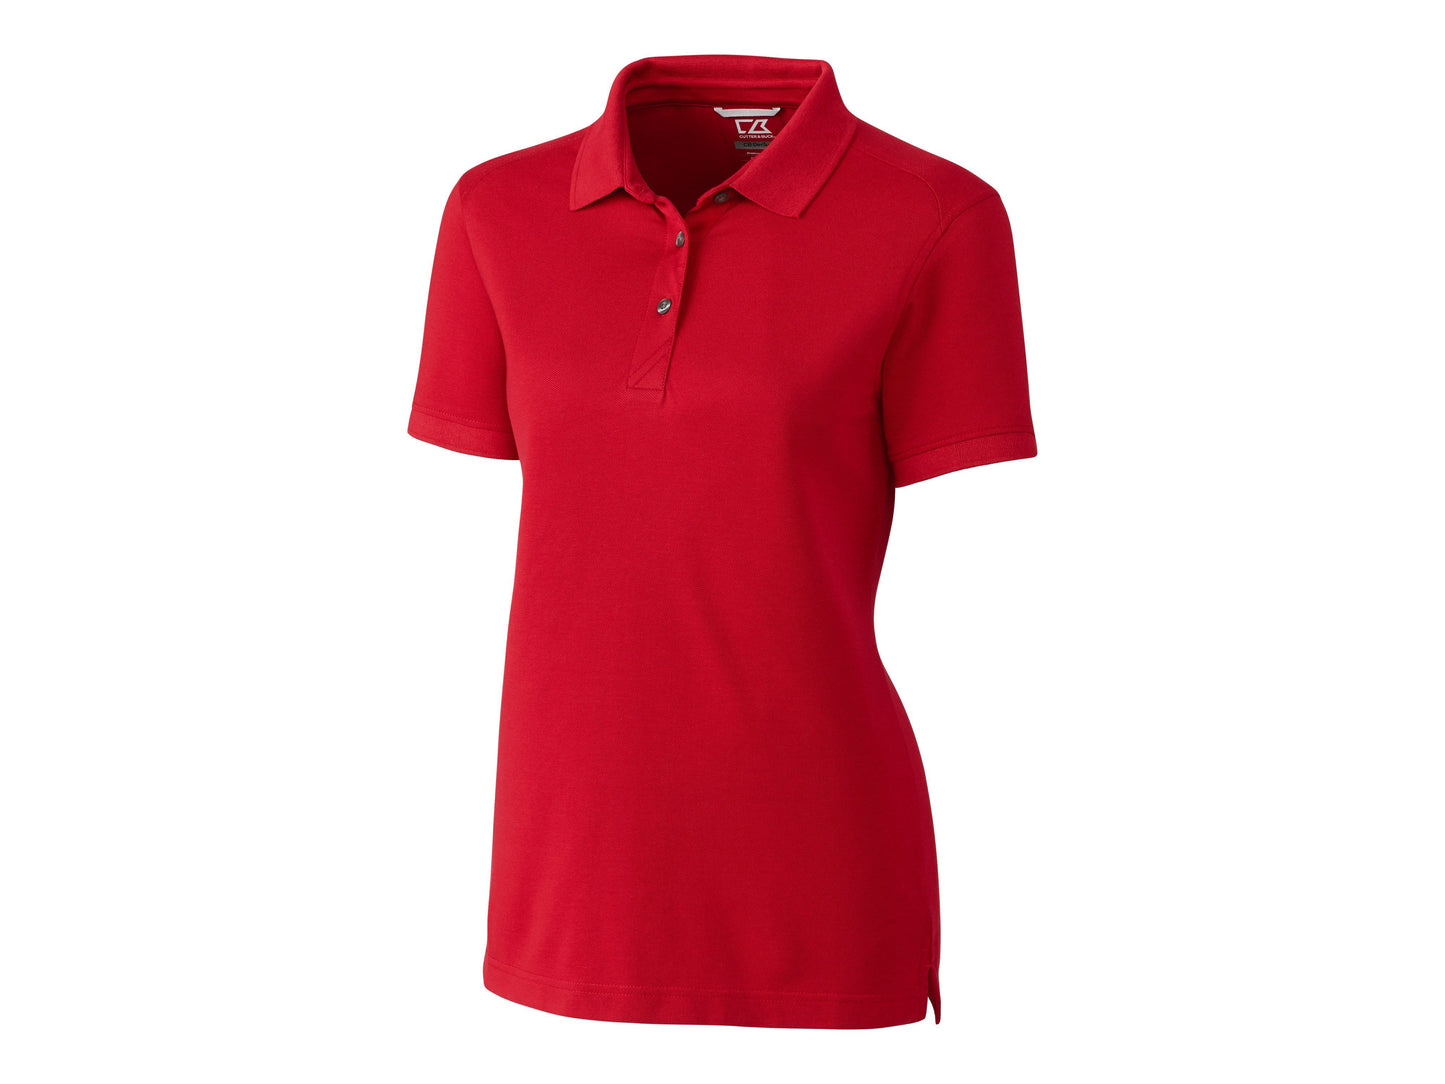 Cutter and Buck Shirts Advantage Polo (Women's Cut) - LCK08685 - Red